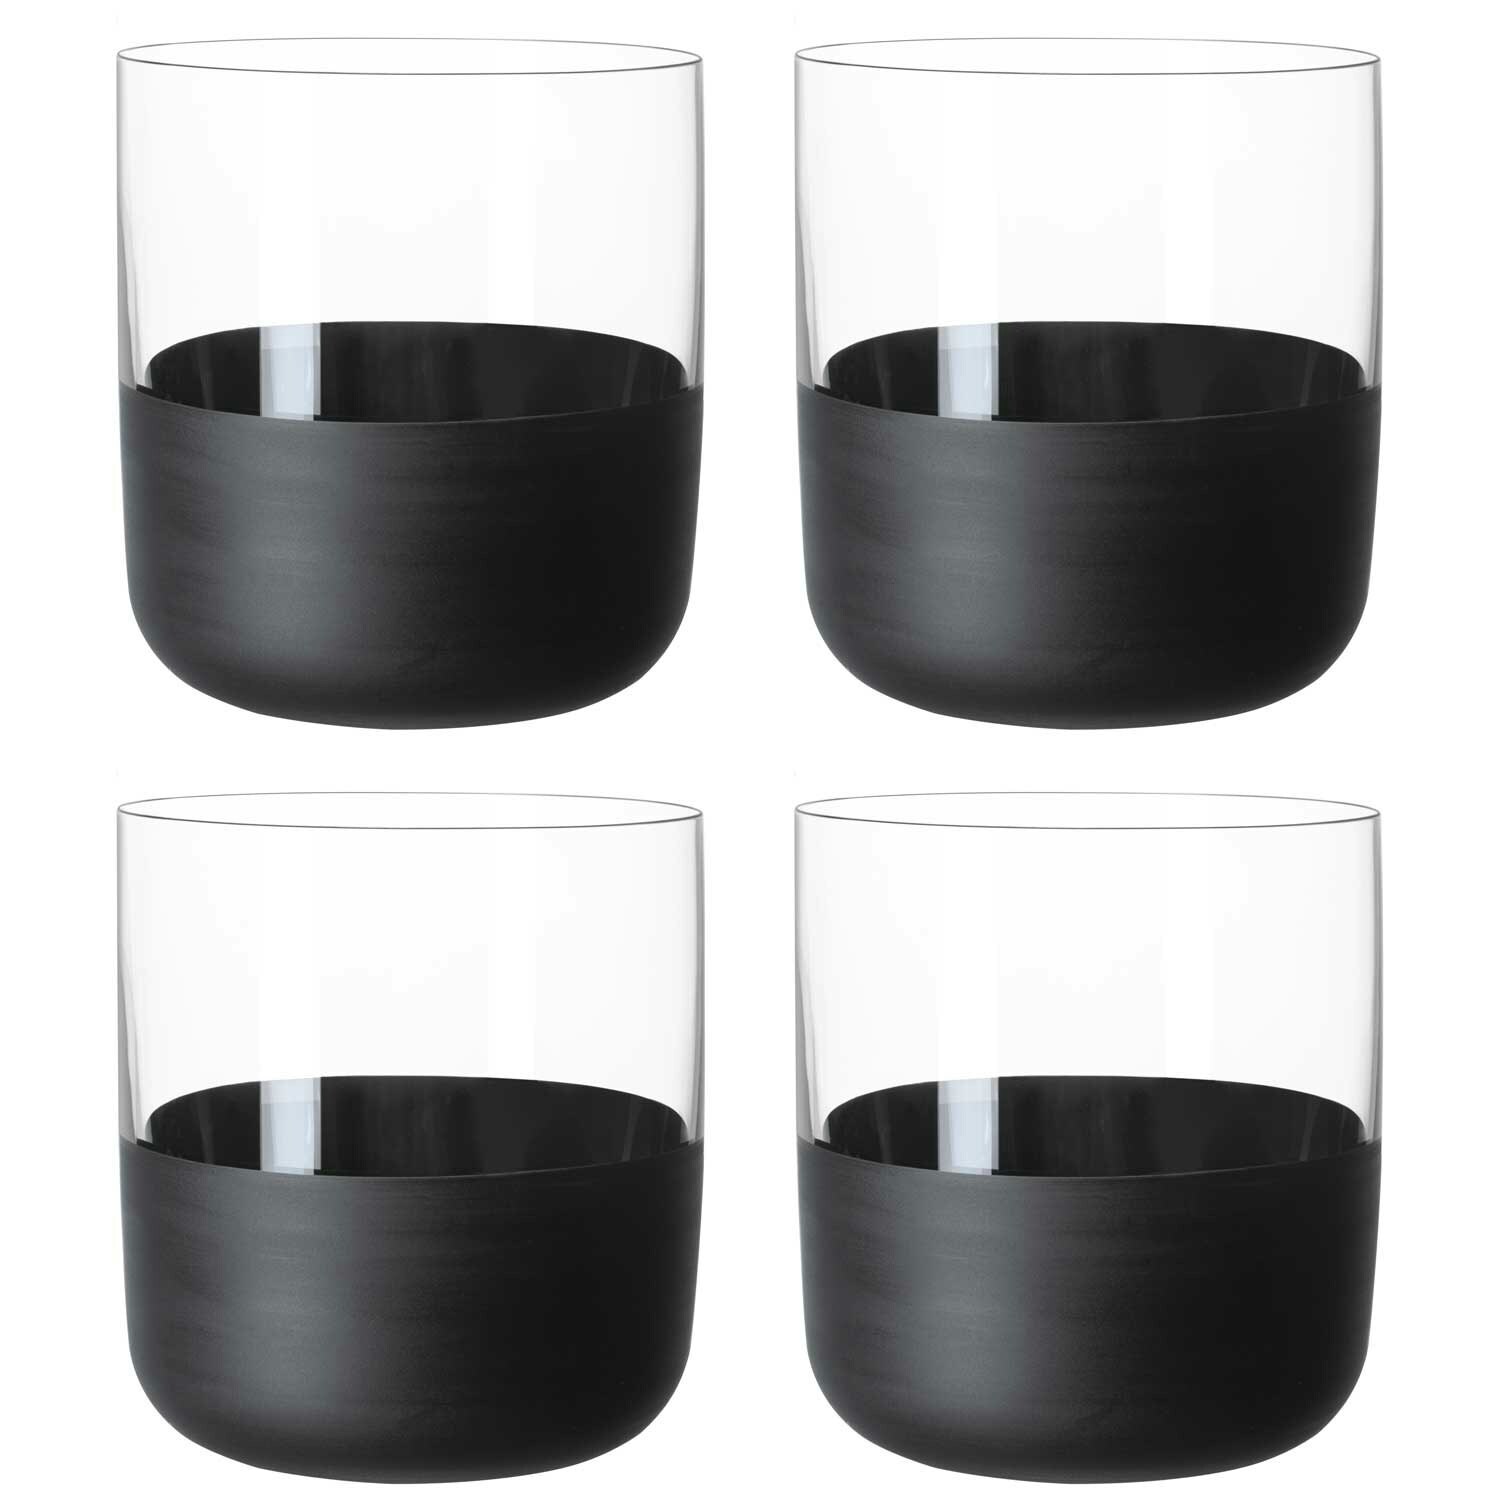 Rocks Drinking Glass Set: 2-Pack